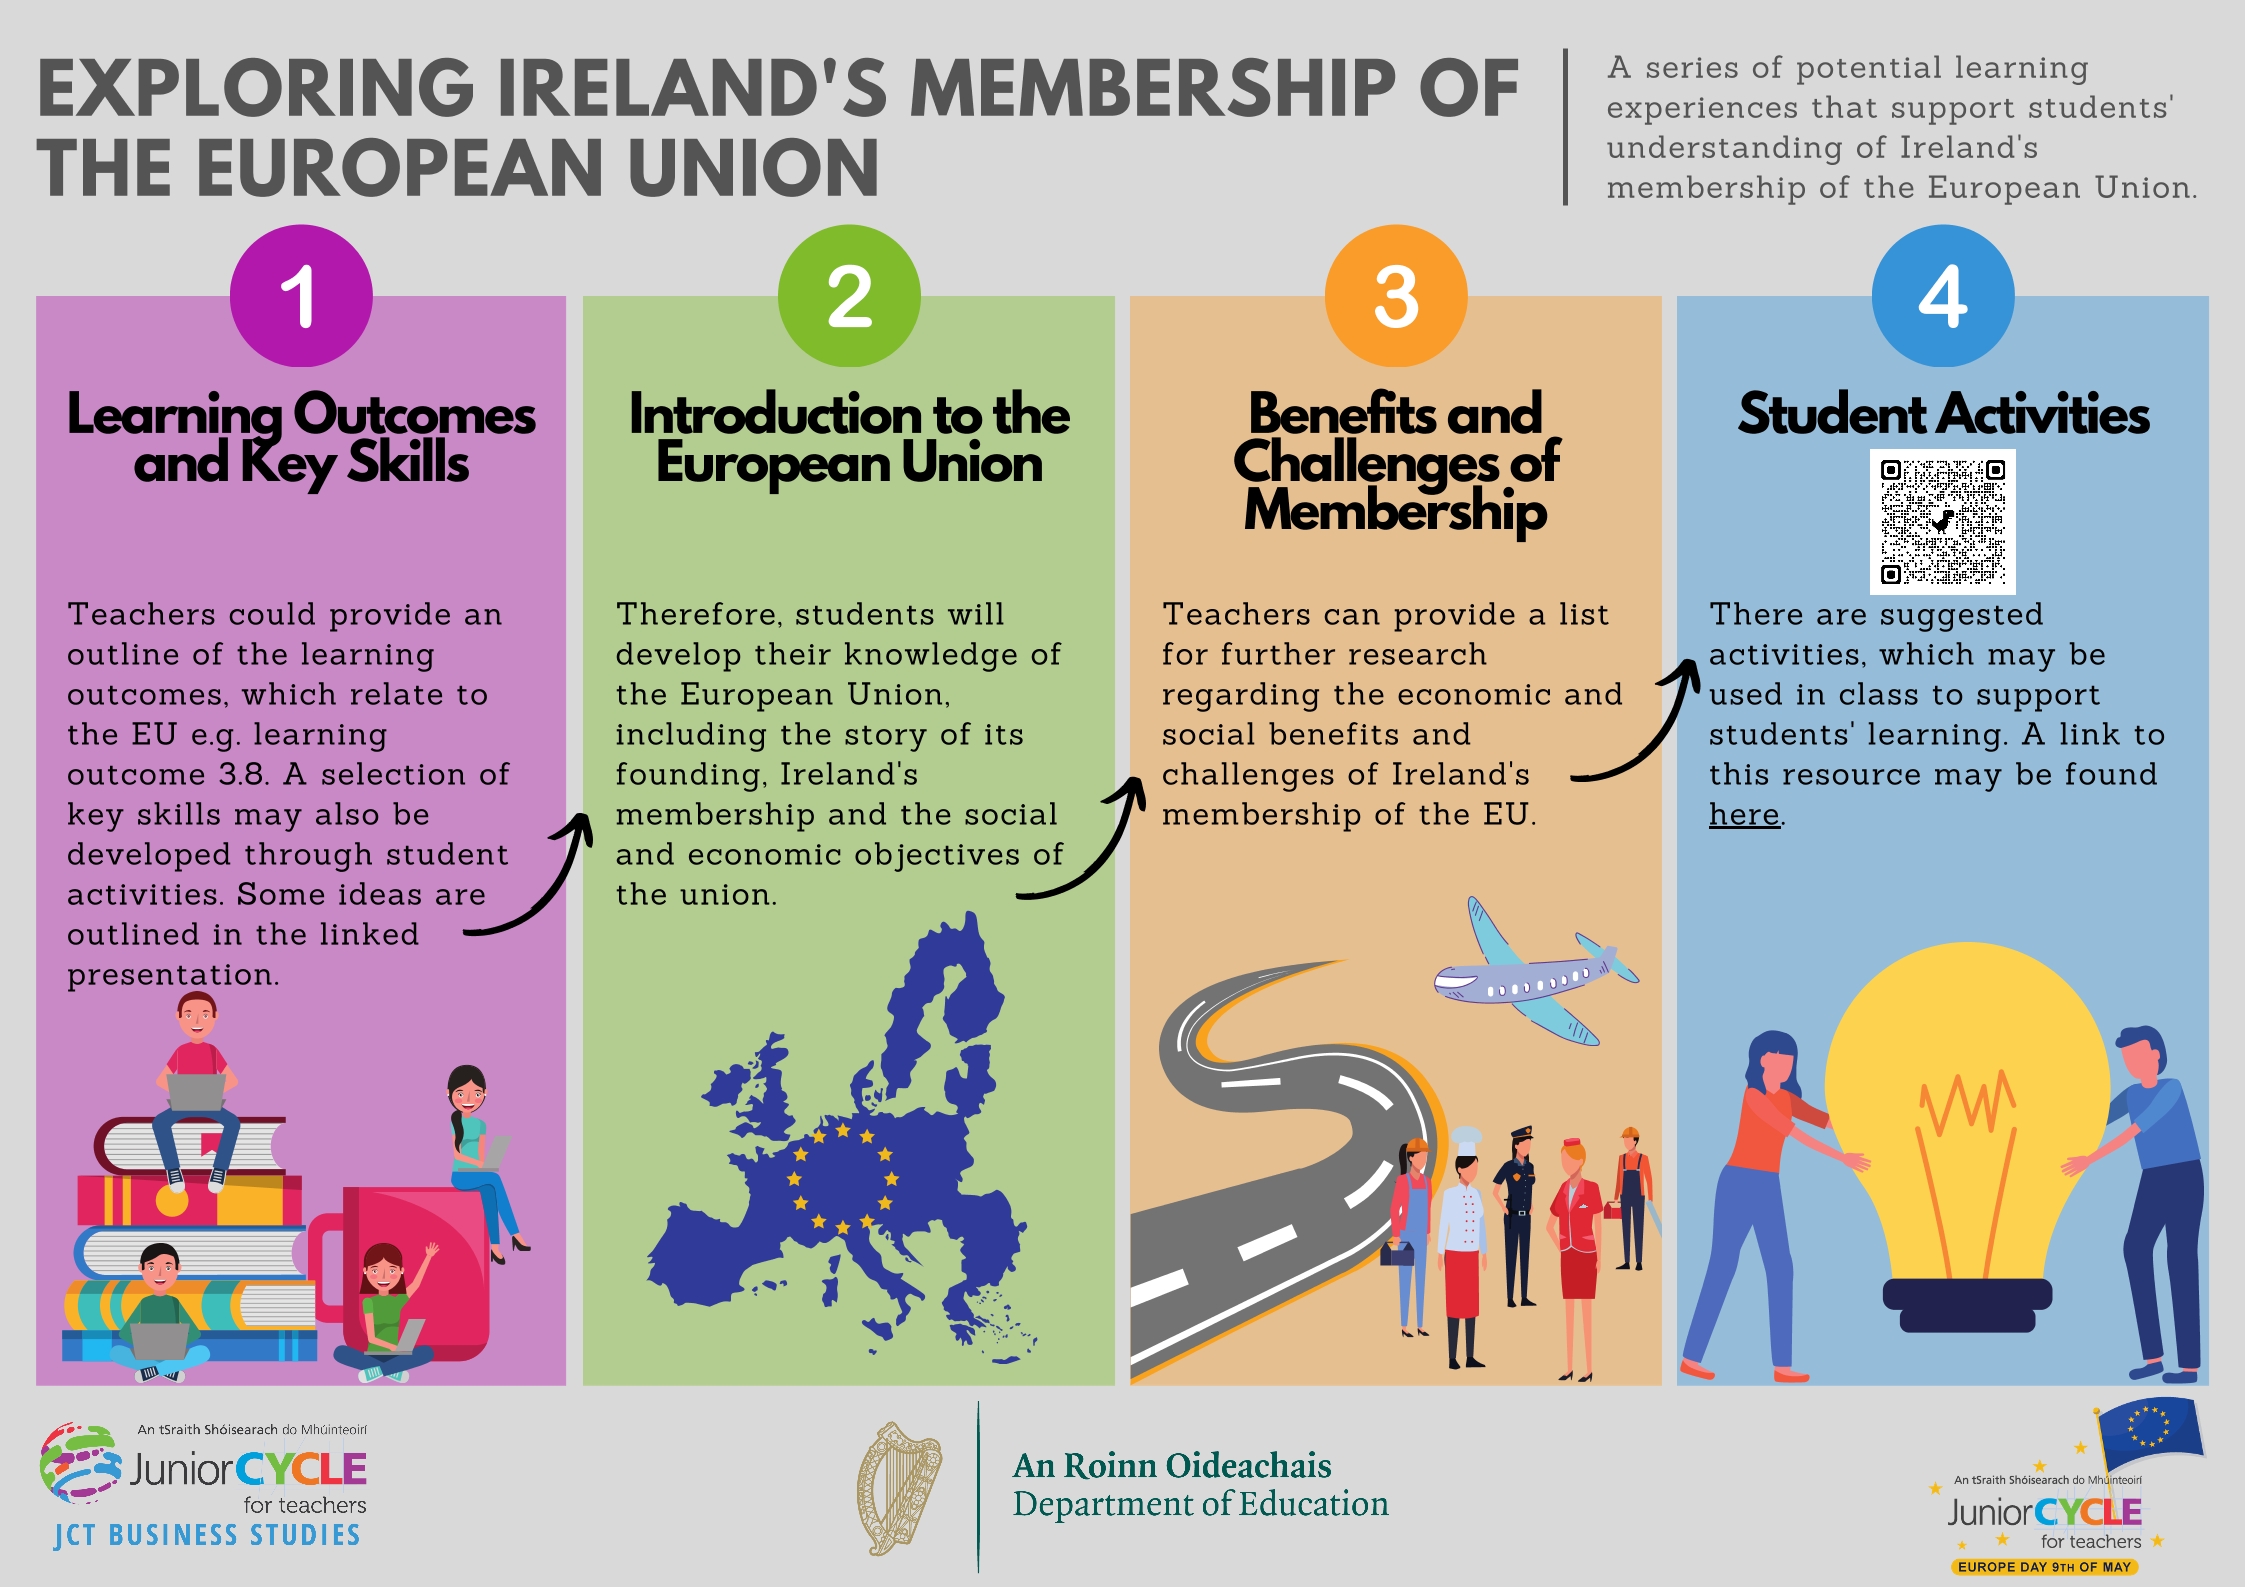 Europe Day Resource - Exploring Ireland's EU Membership